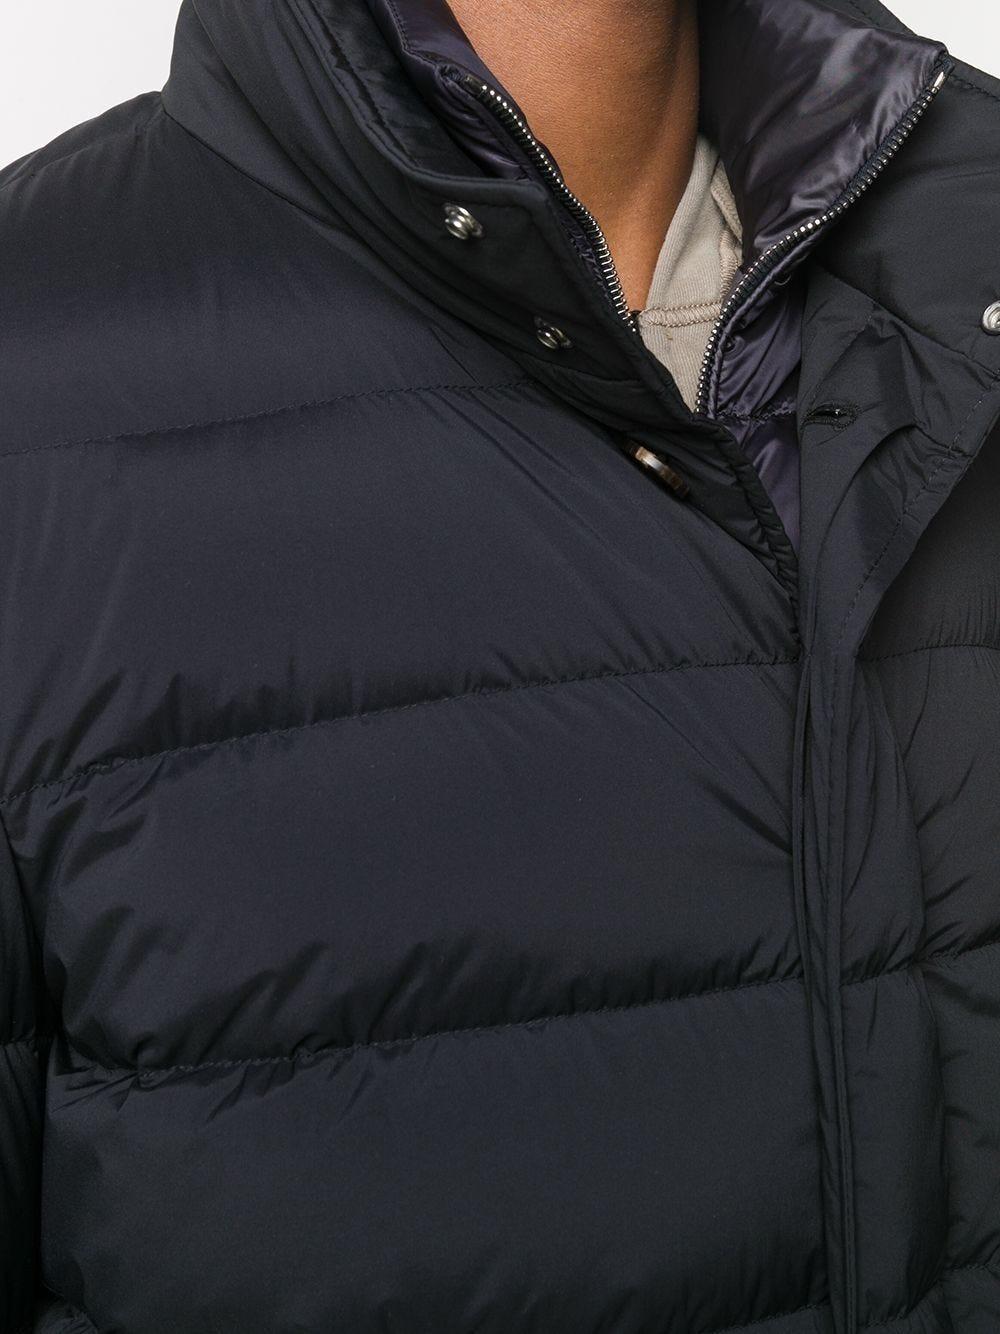 Moncler Synthetic Bornes Jacket in Black for Men - Lyst